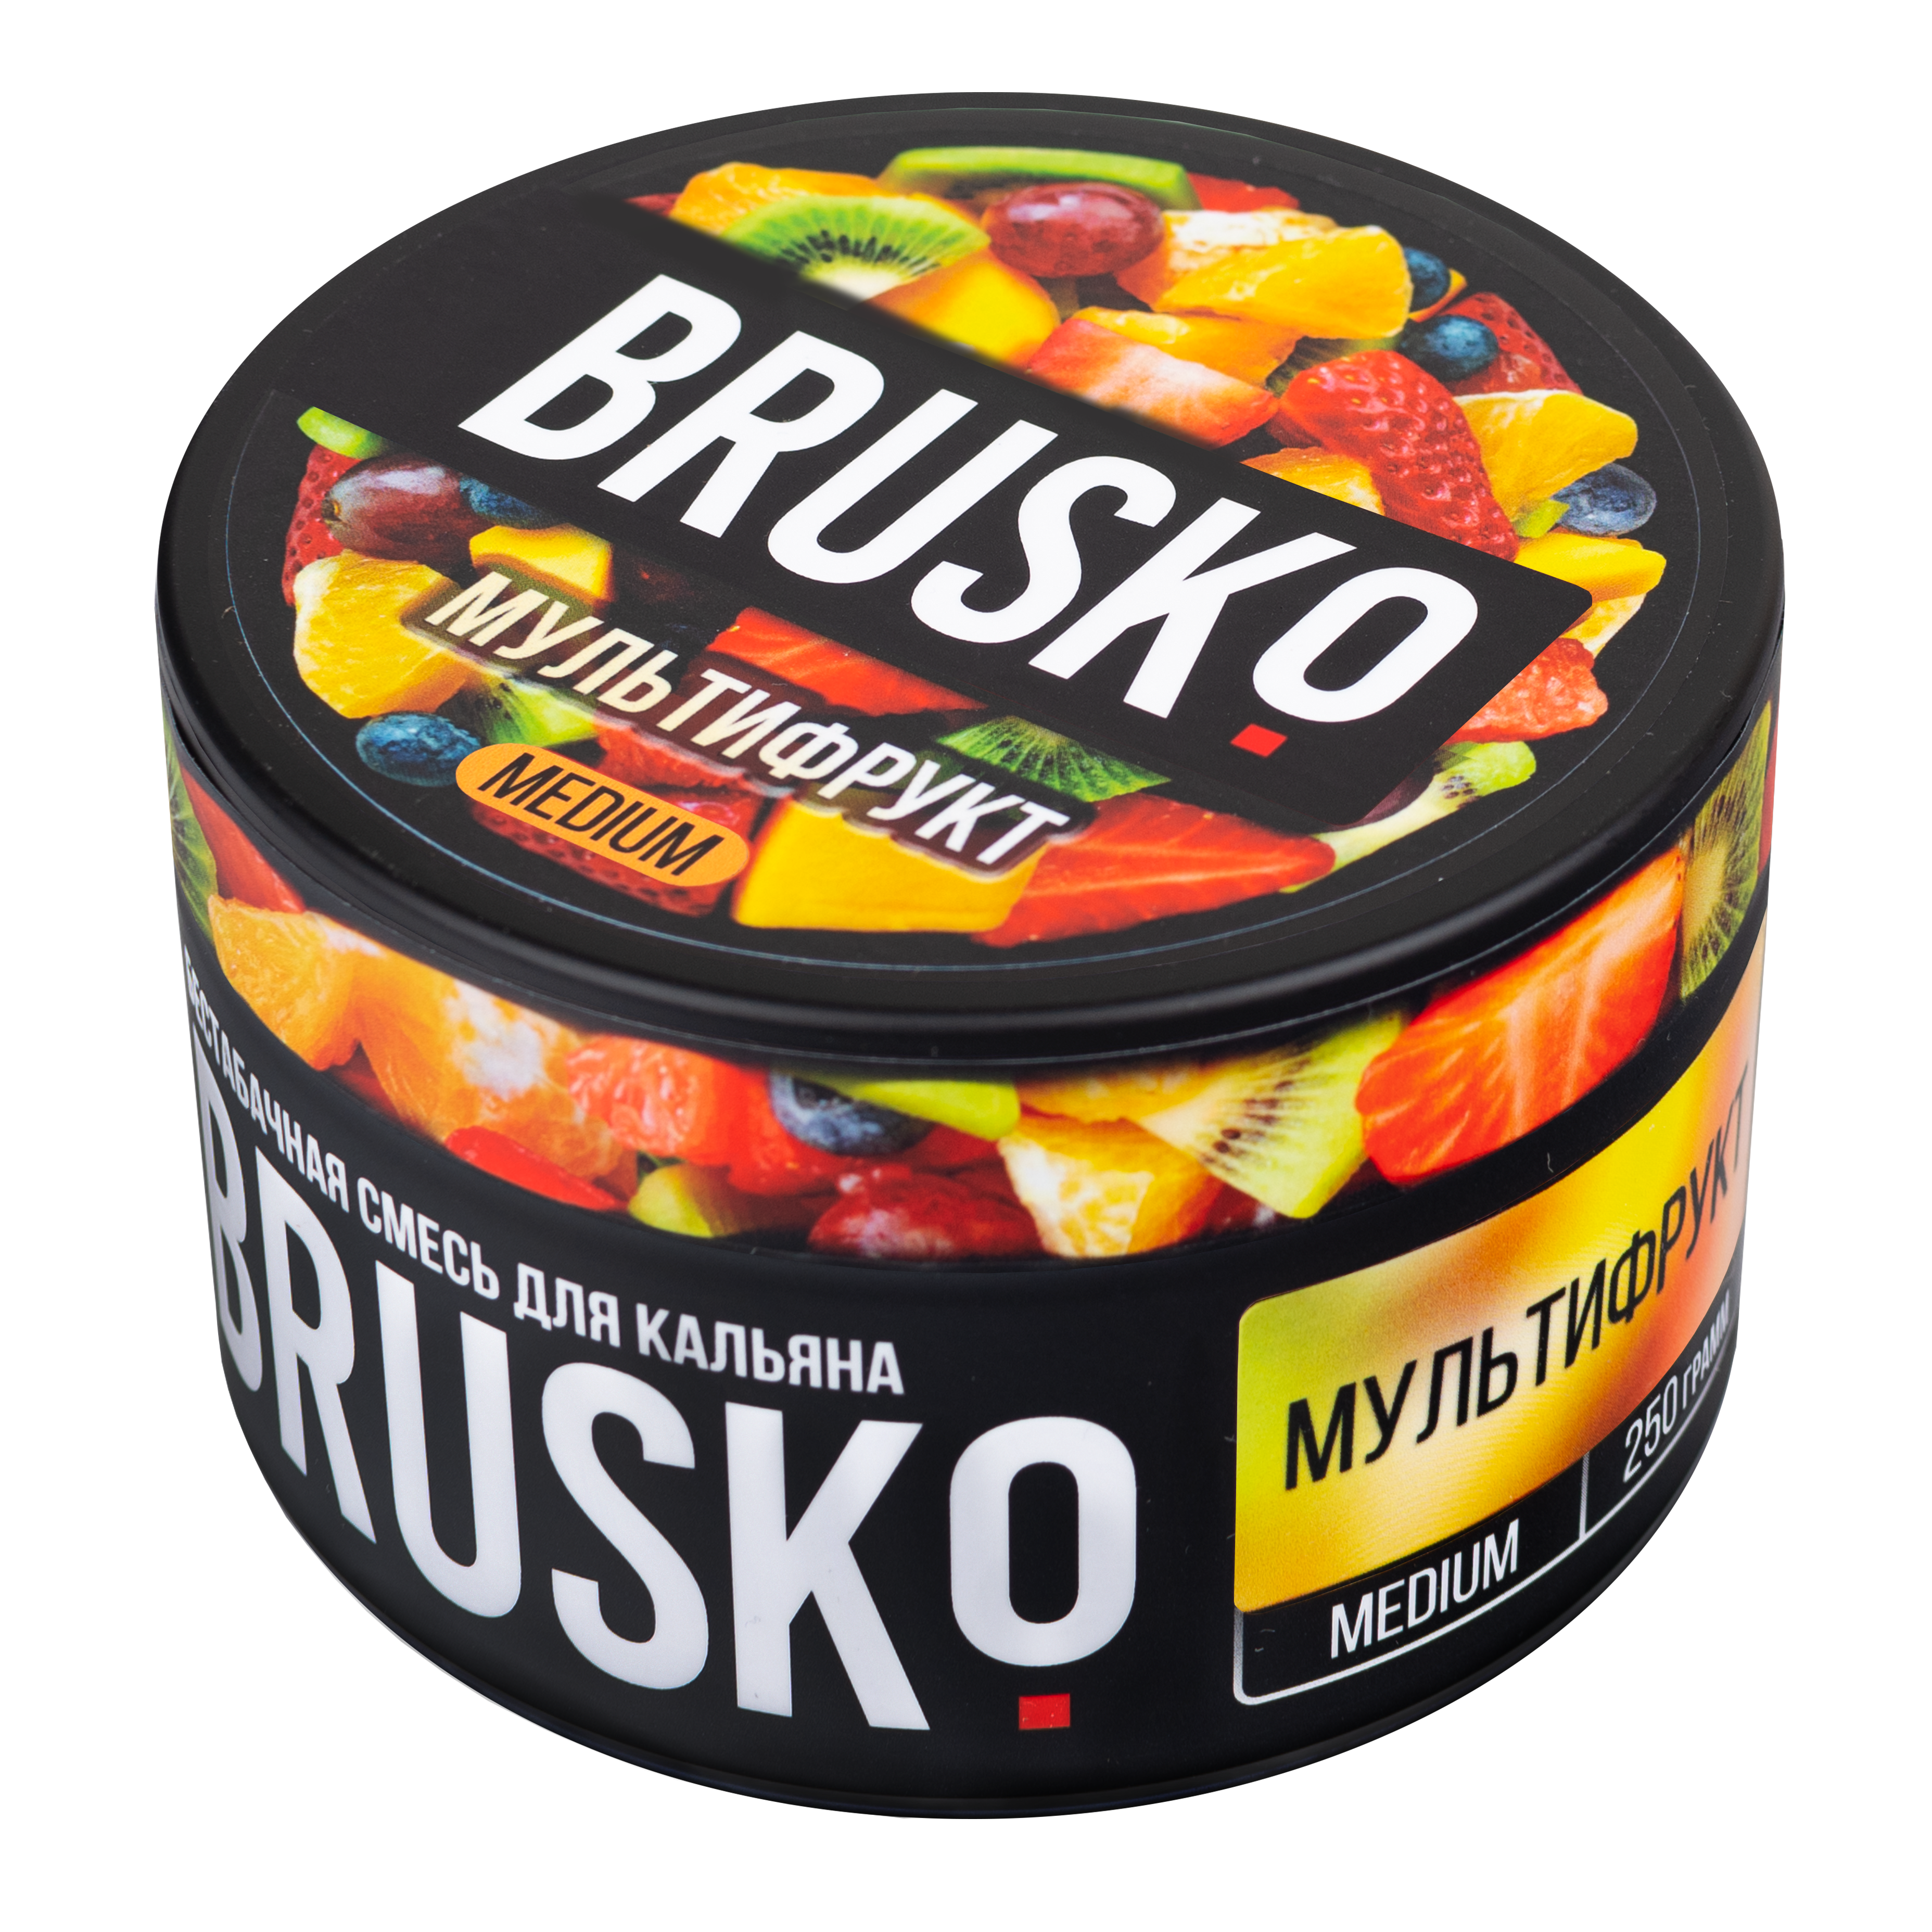 Brusko - ЧАЙ - МУЛЬТИФРУКТ - 250 g